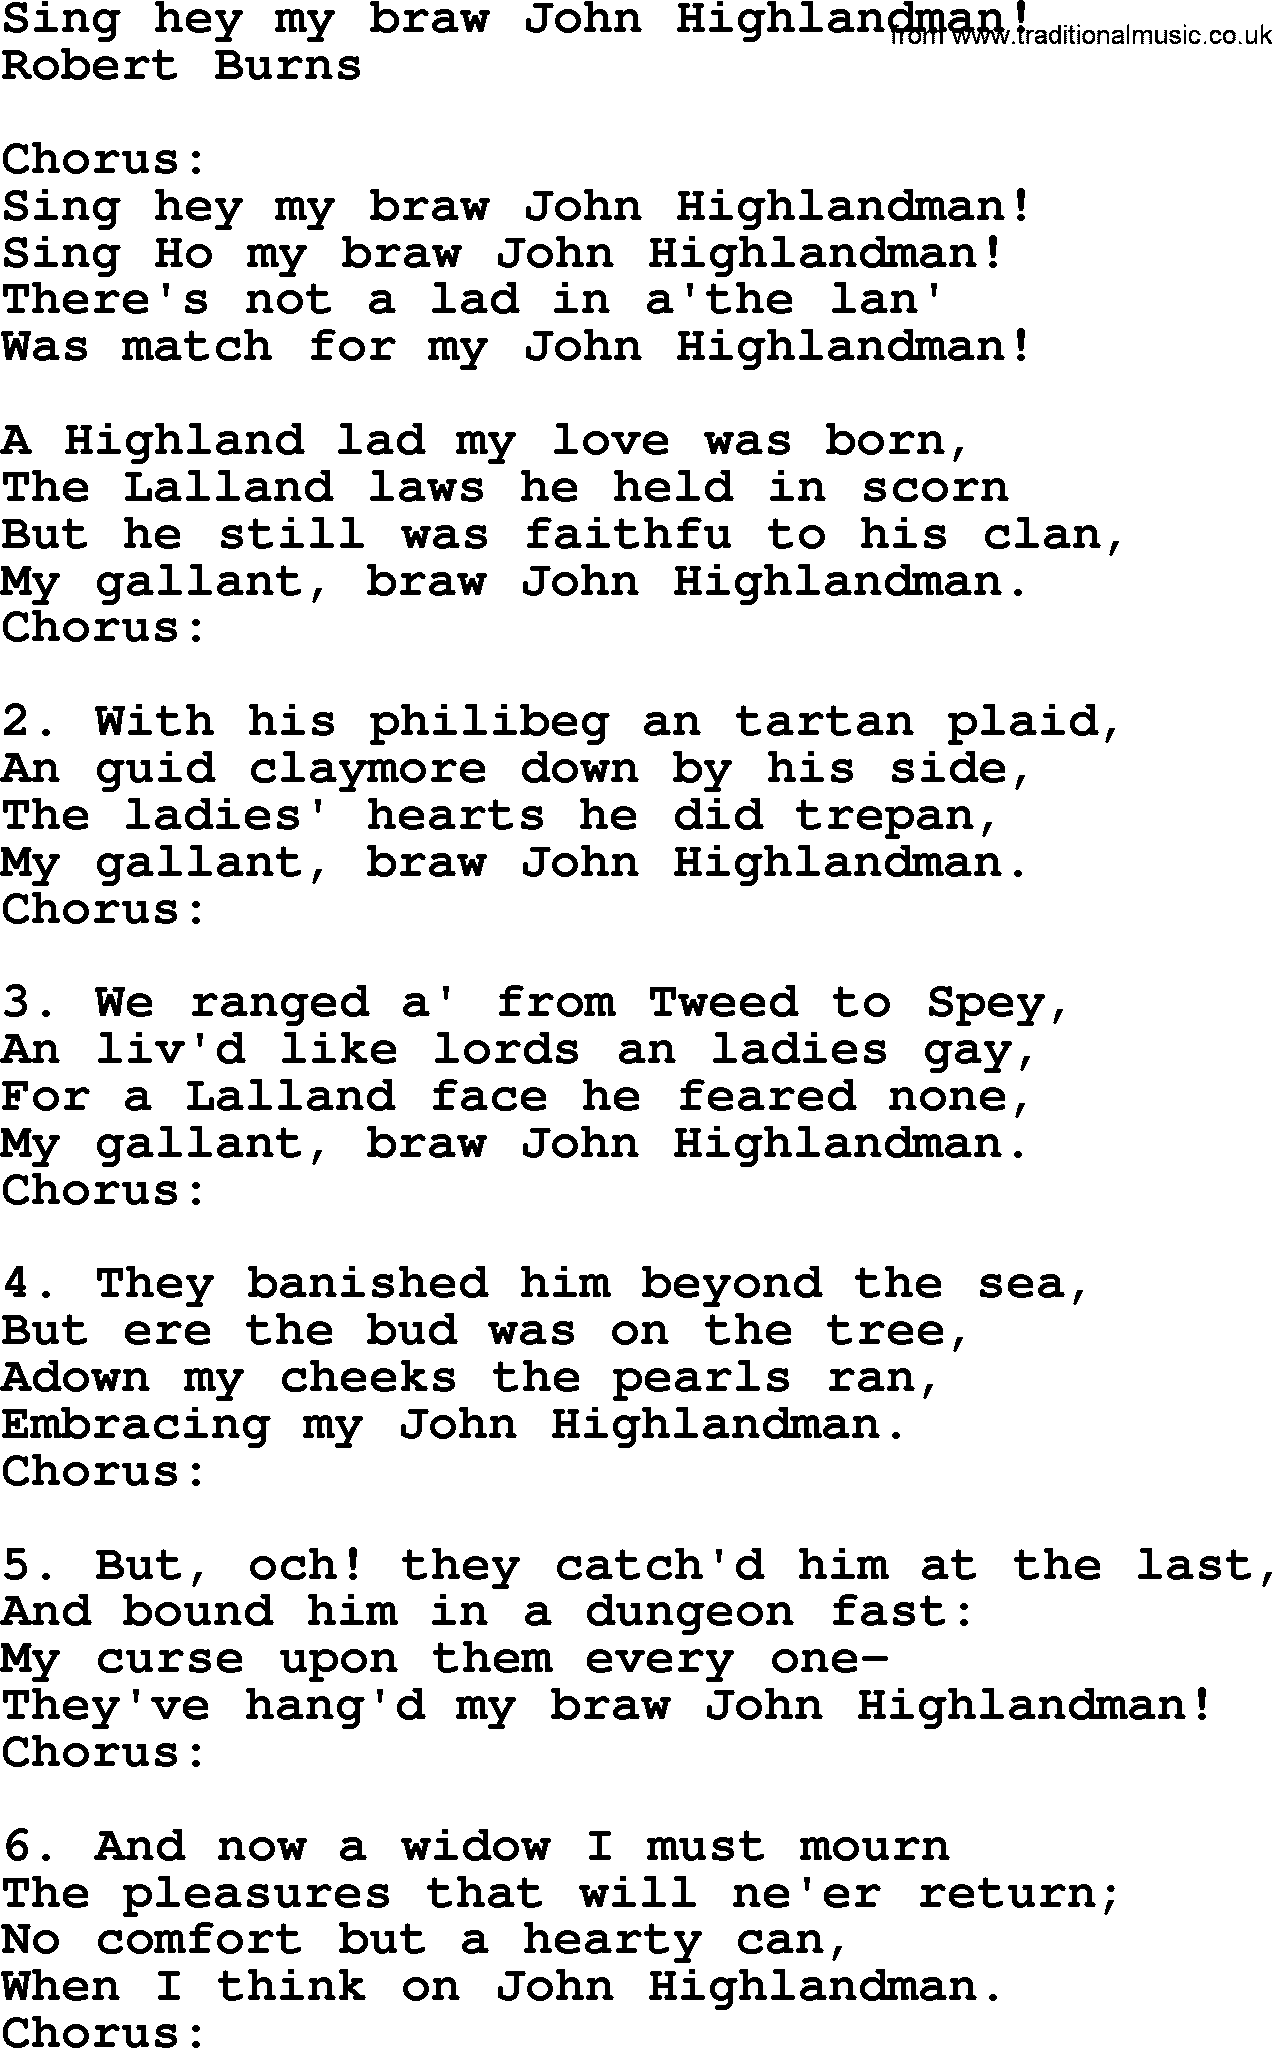 Robert Burns Songs & Lyrics: Sing Hey My Braw John Highlandman!